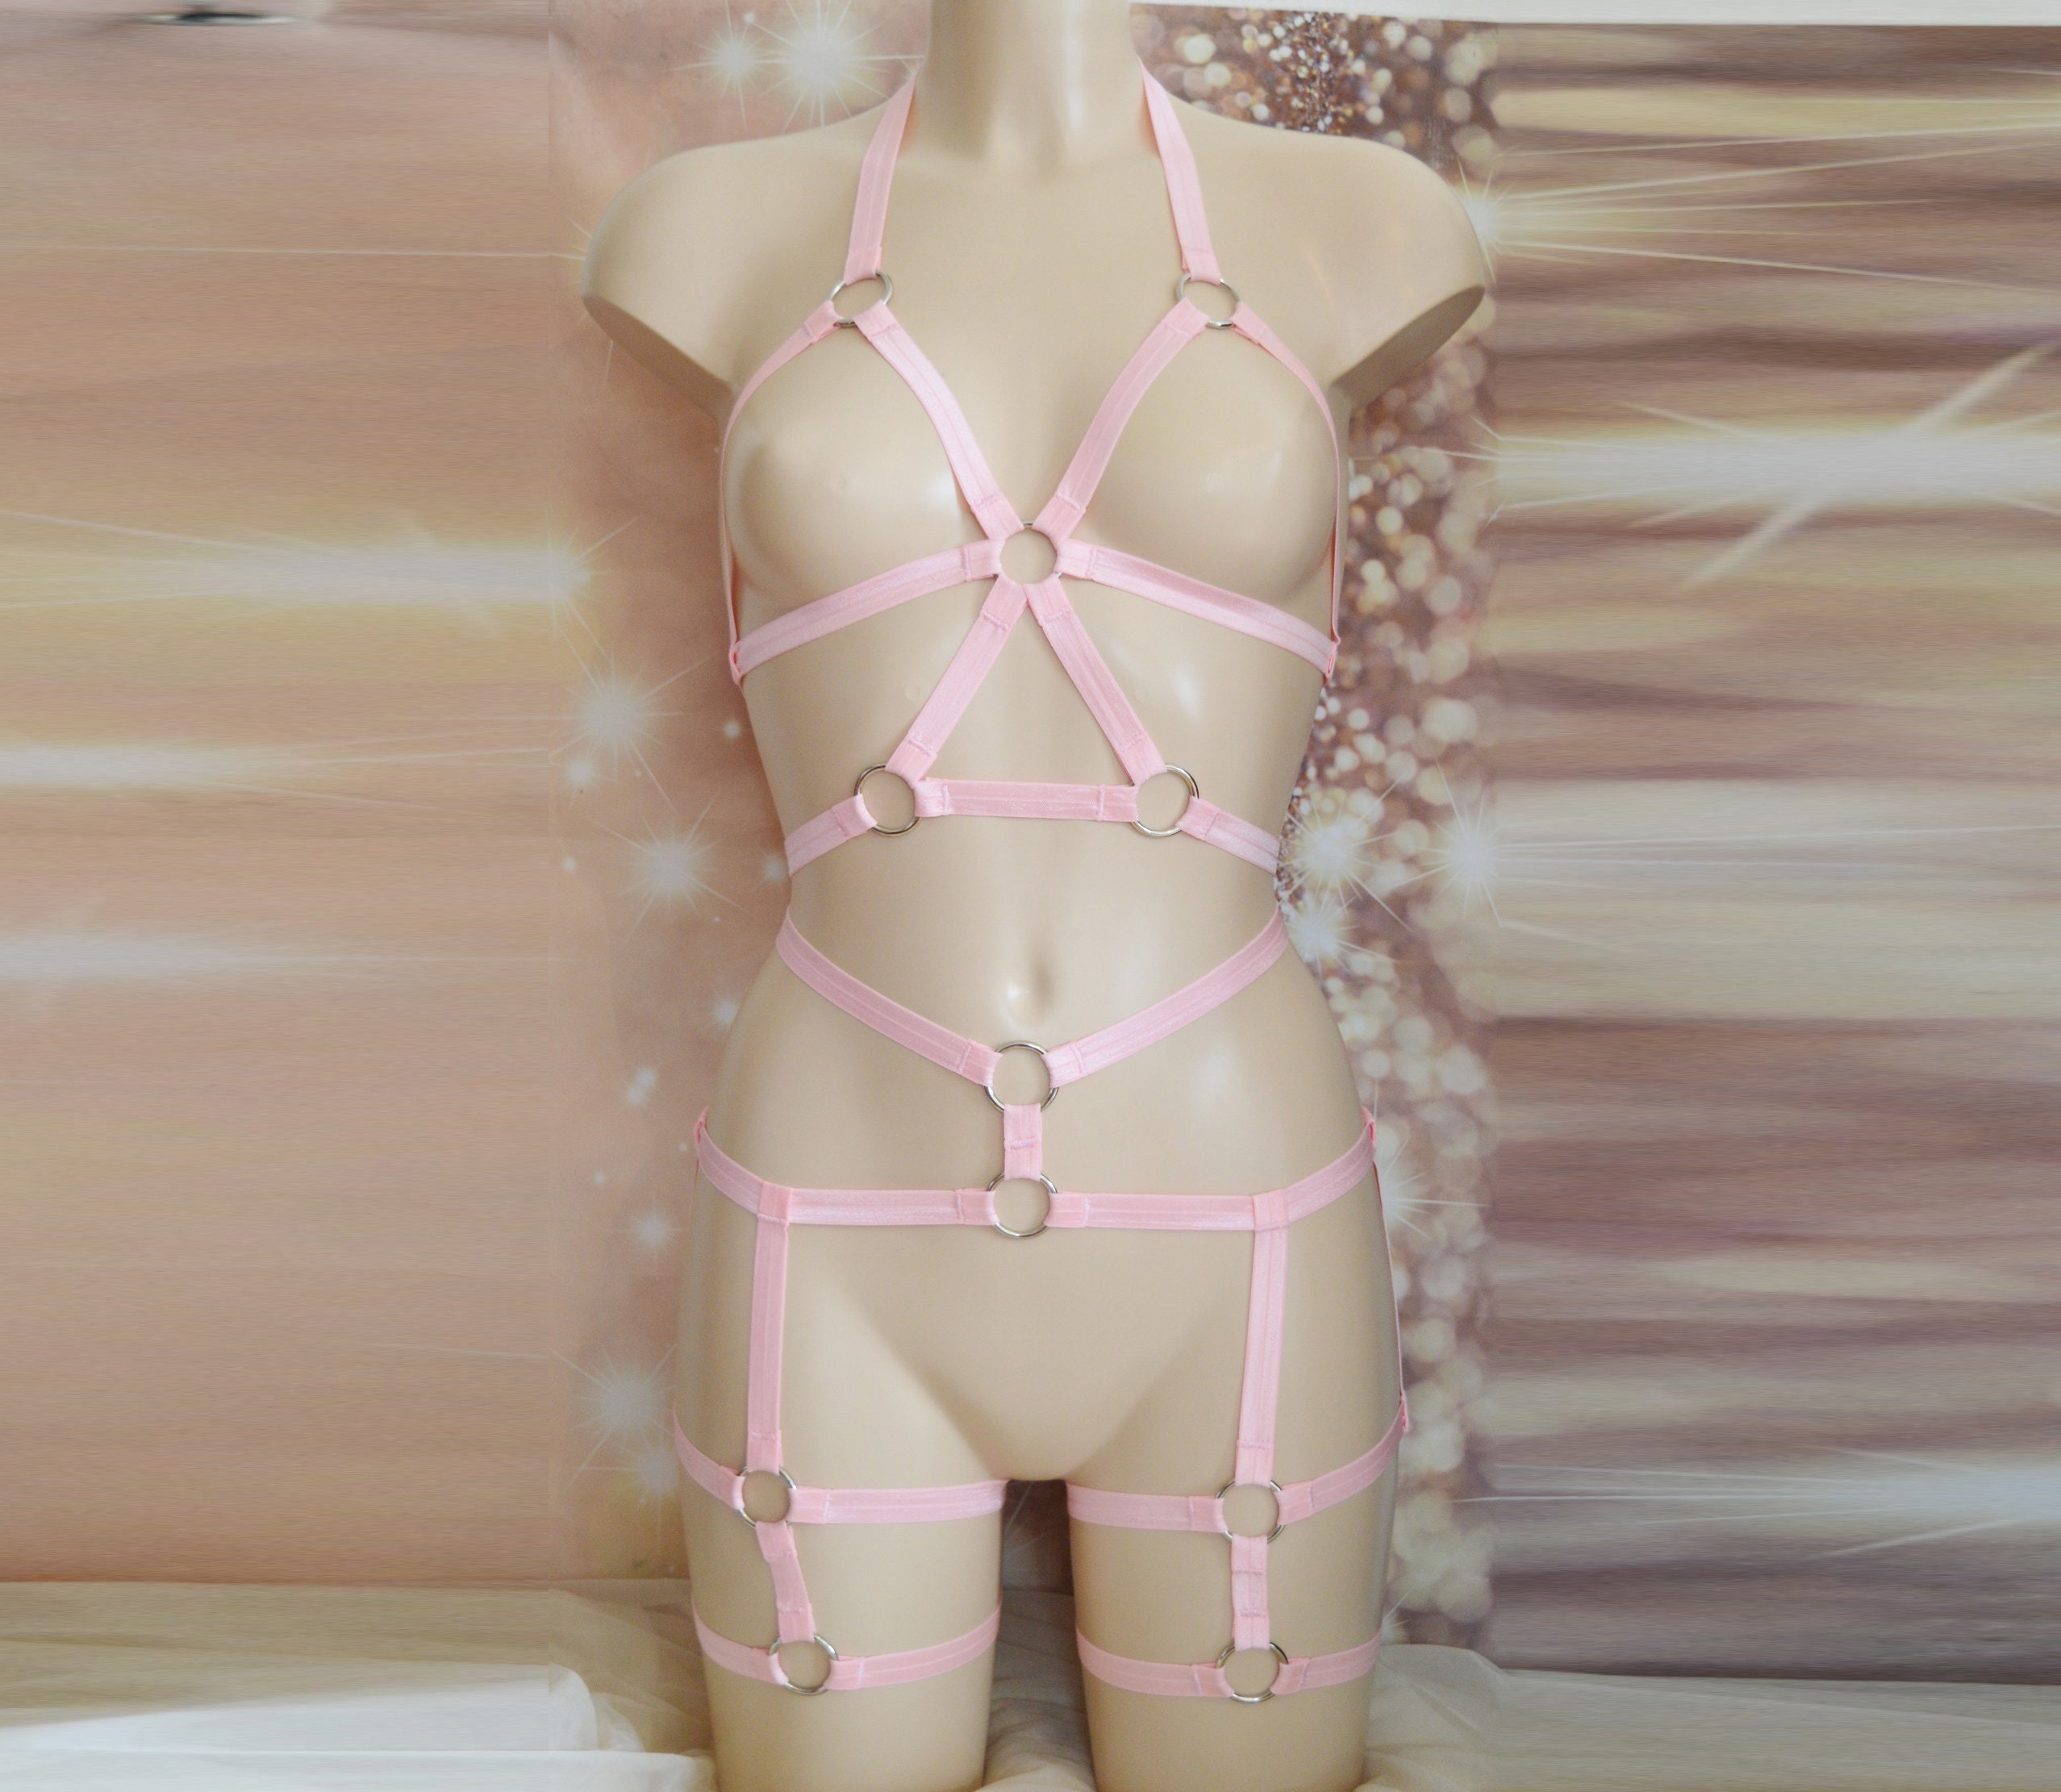 Made to Order Full Body Harness Saliela Sweetilda Pink pic